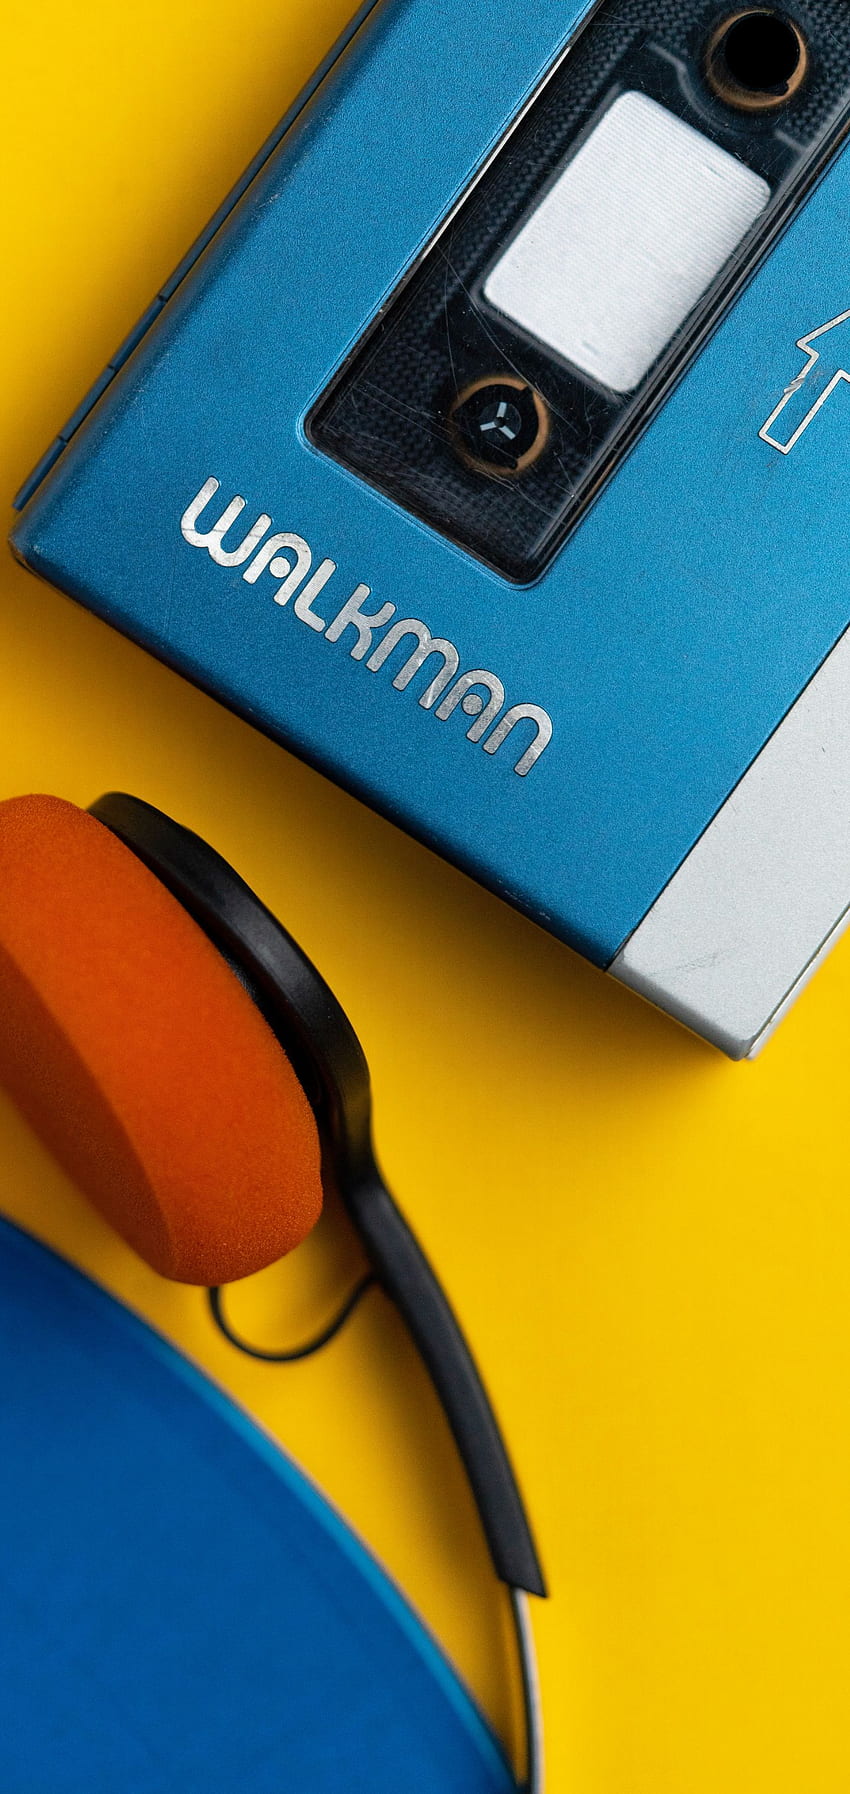 Sony Walkman By Jonathan Morrison Galaxy S10 Hole Punch HD phone wallpaper